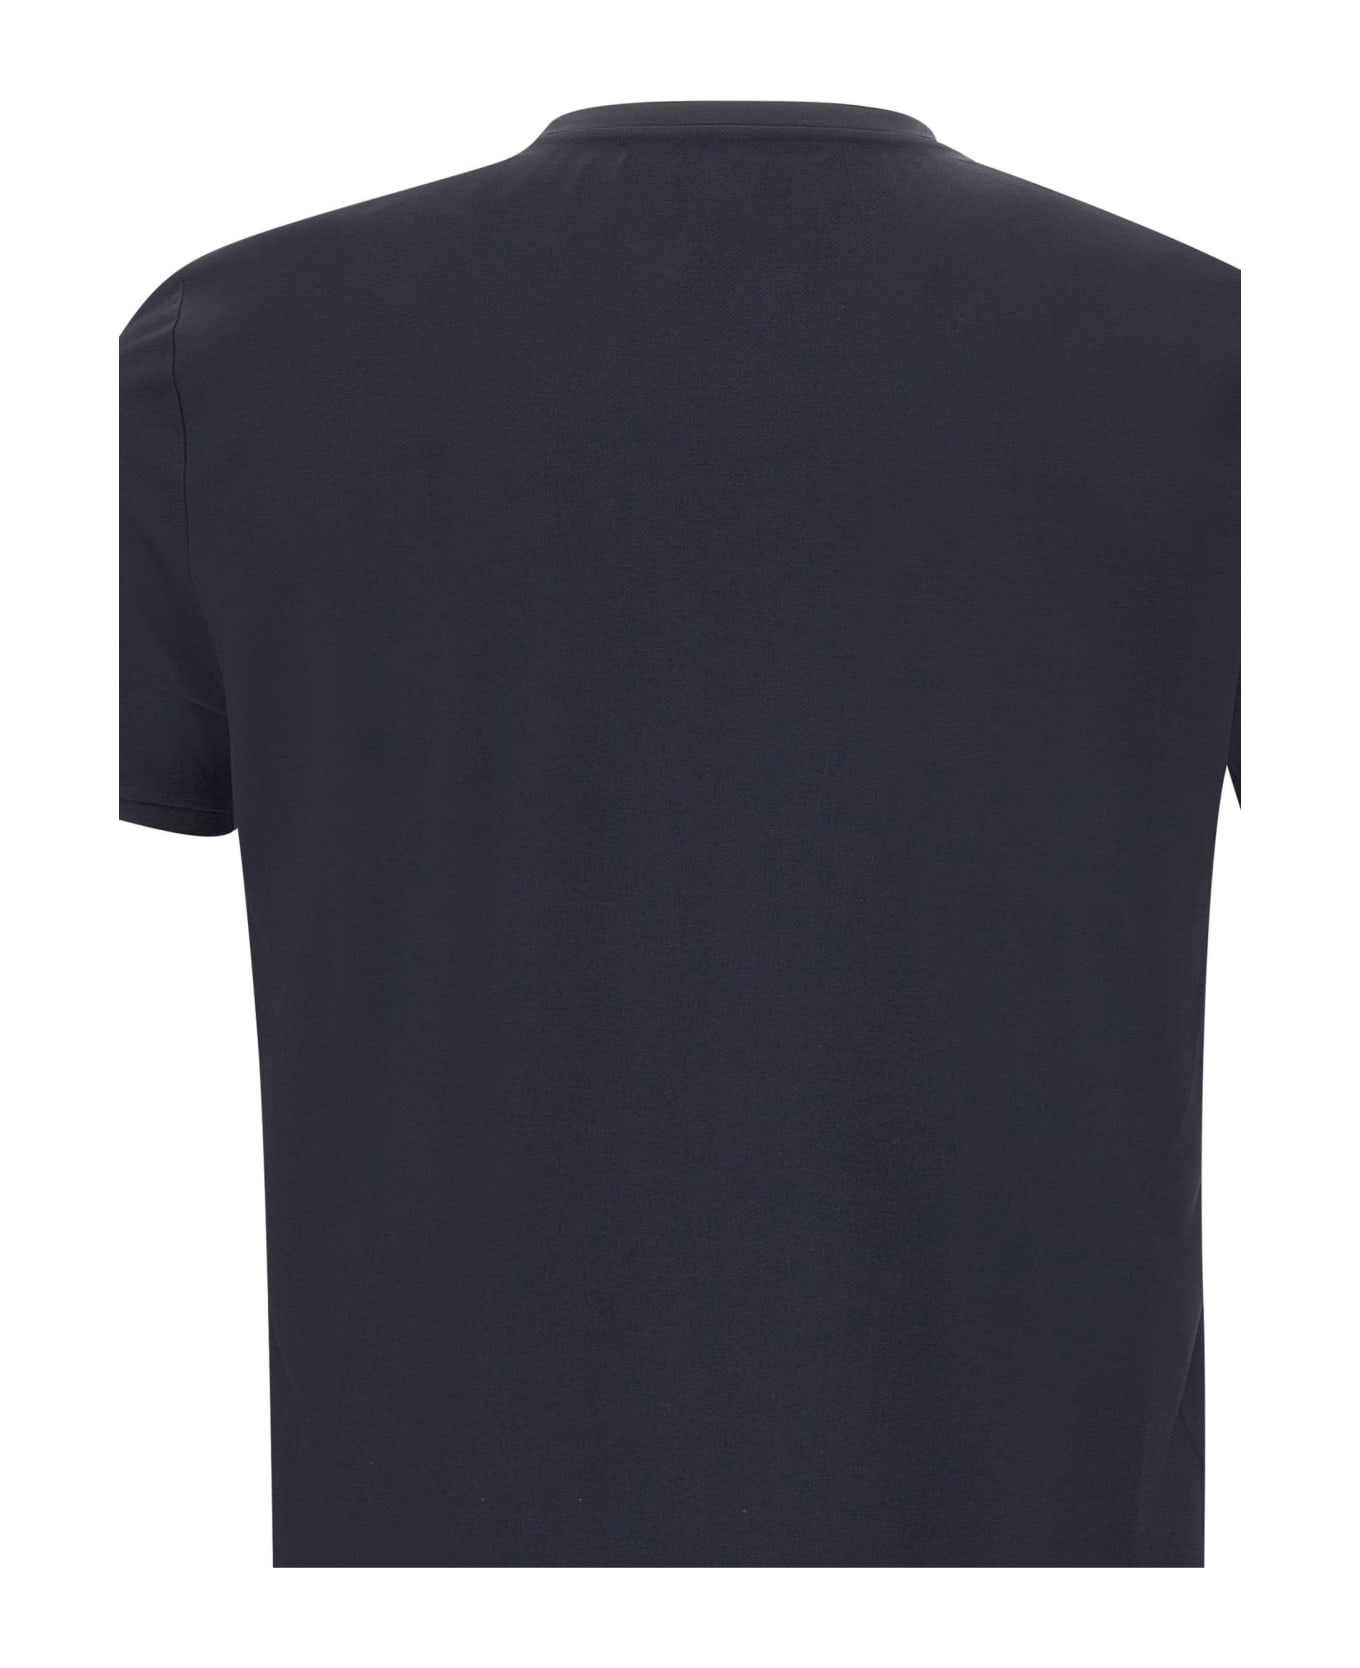 RRD - Roberto Ricci Design "oxford Pocket Shirty" T-shirt - BLUE